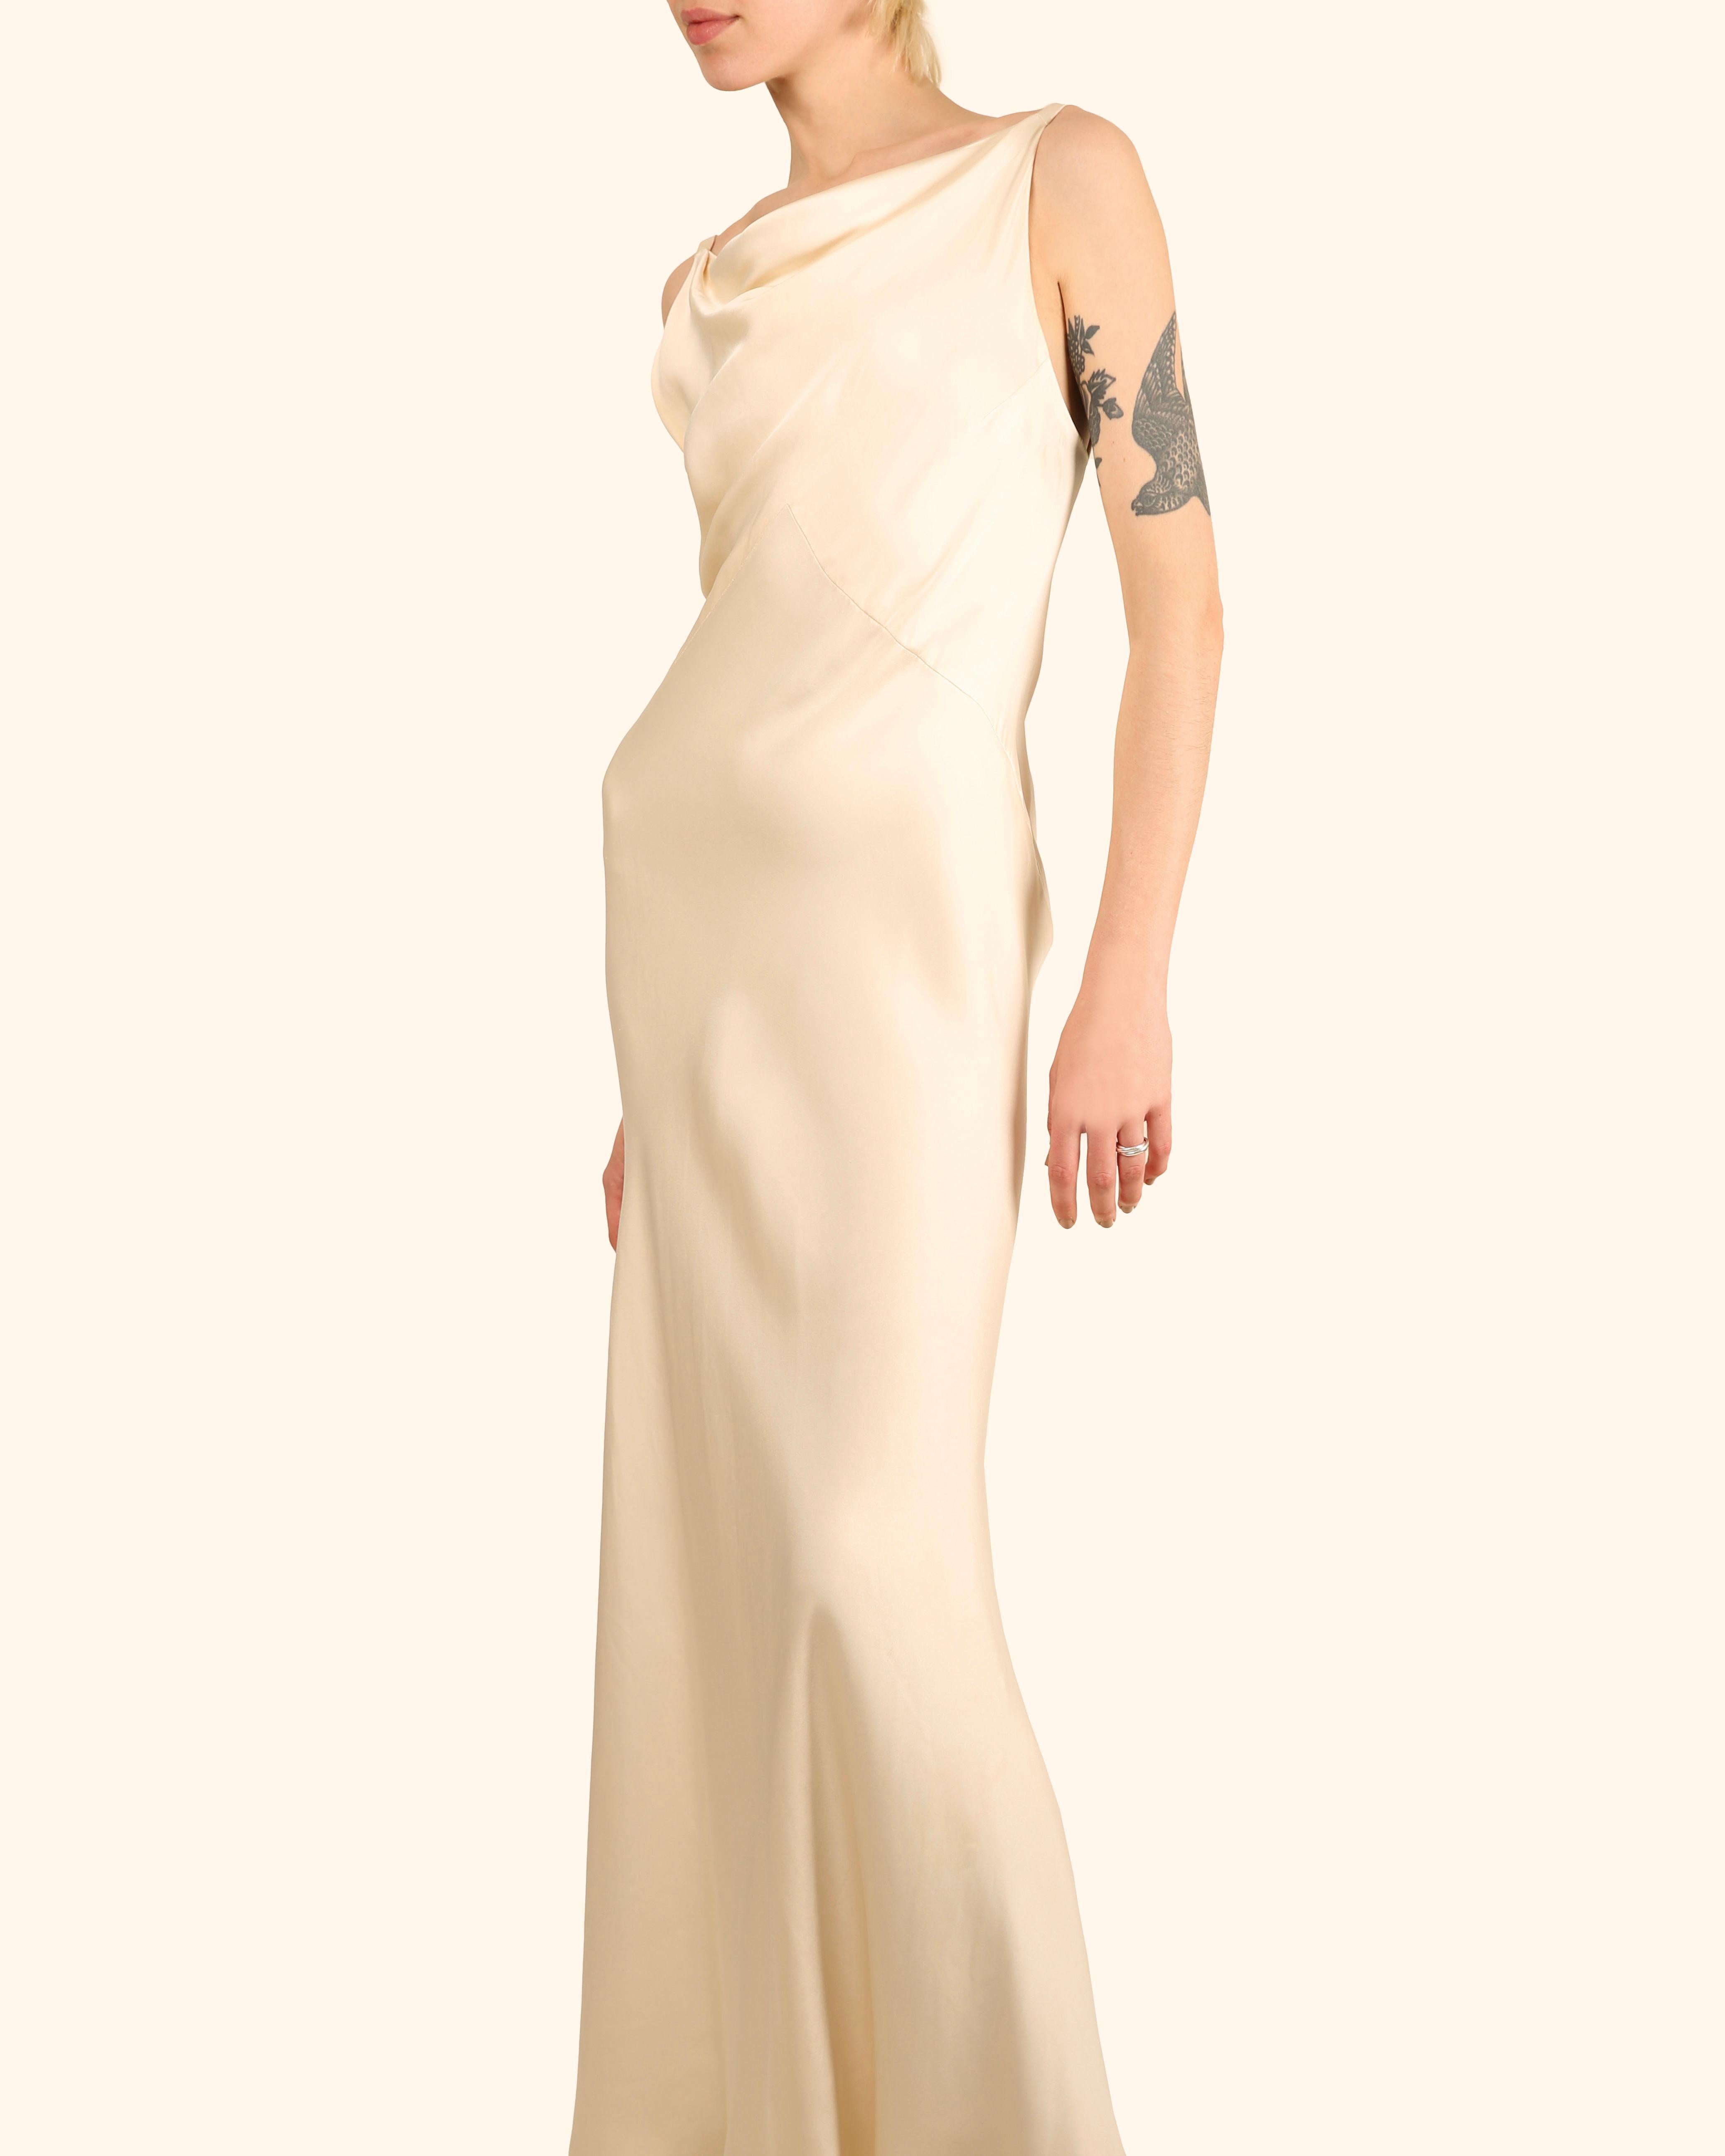 Ralph Lauren champagne bias cut backless silk slip style backless gown dress 6